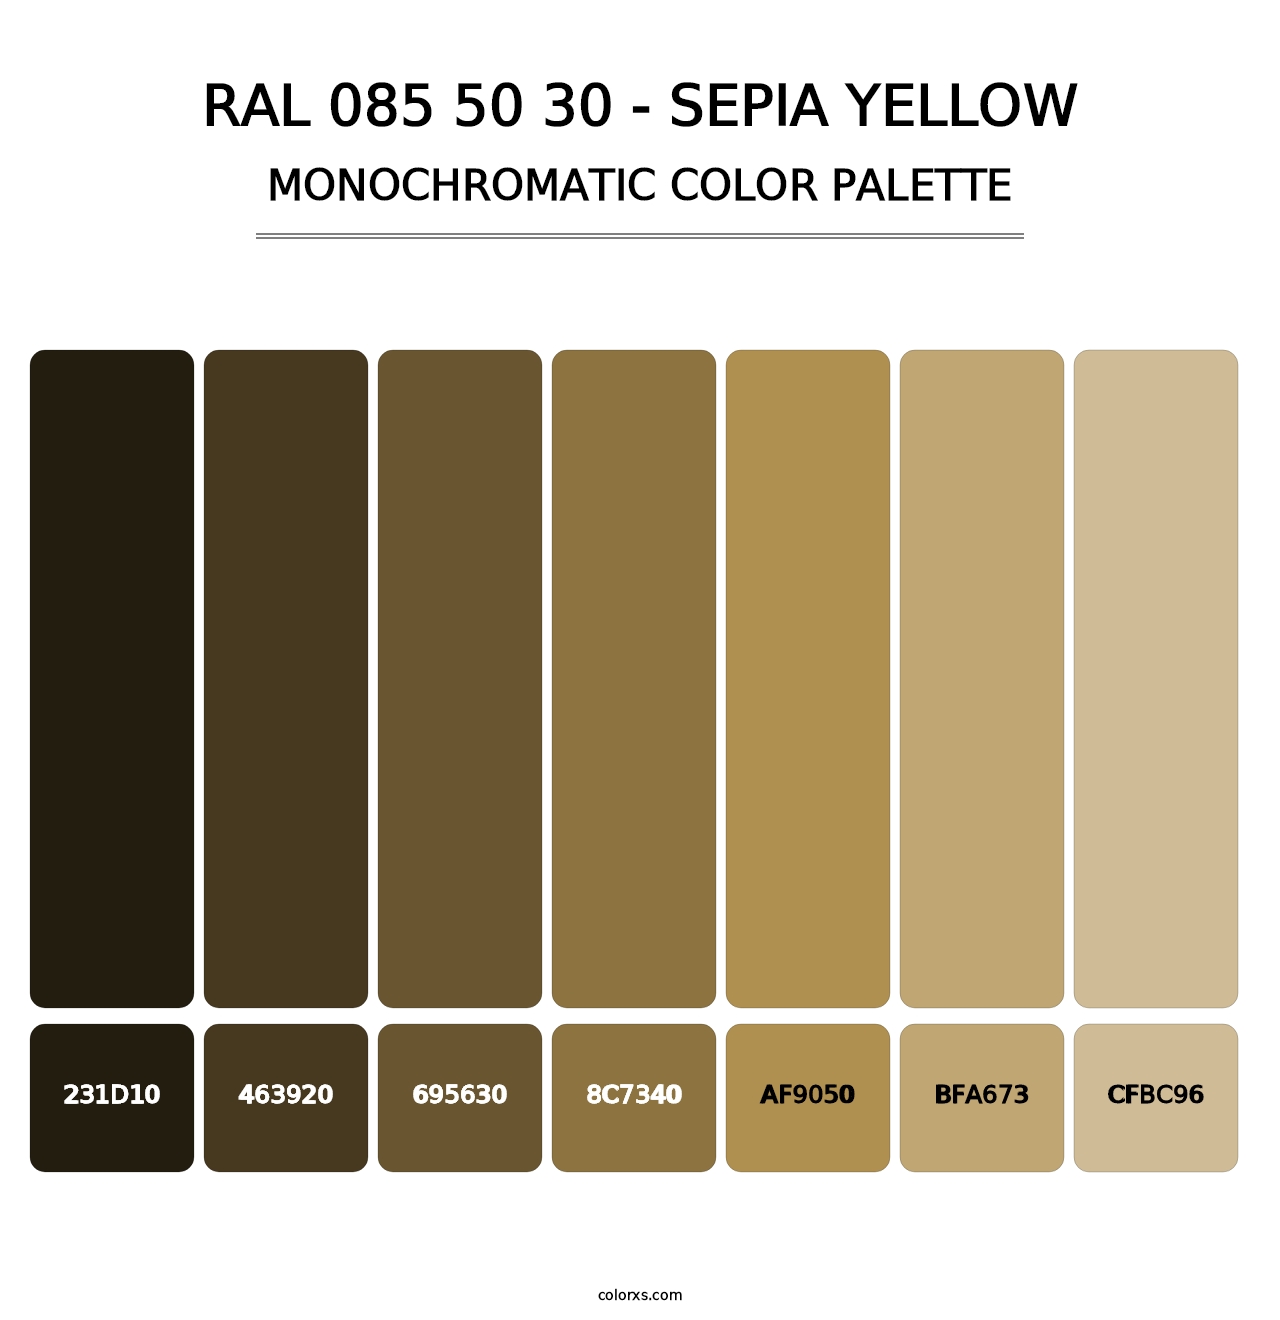 RAL 085 50 30 - Sepia Yellow - Monochromatic Color Palette